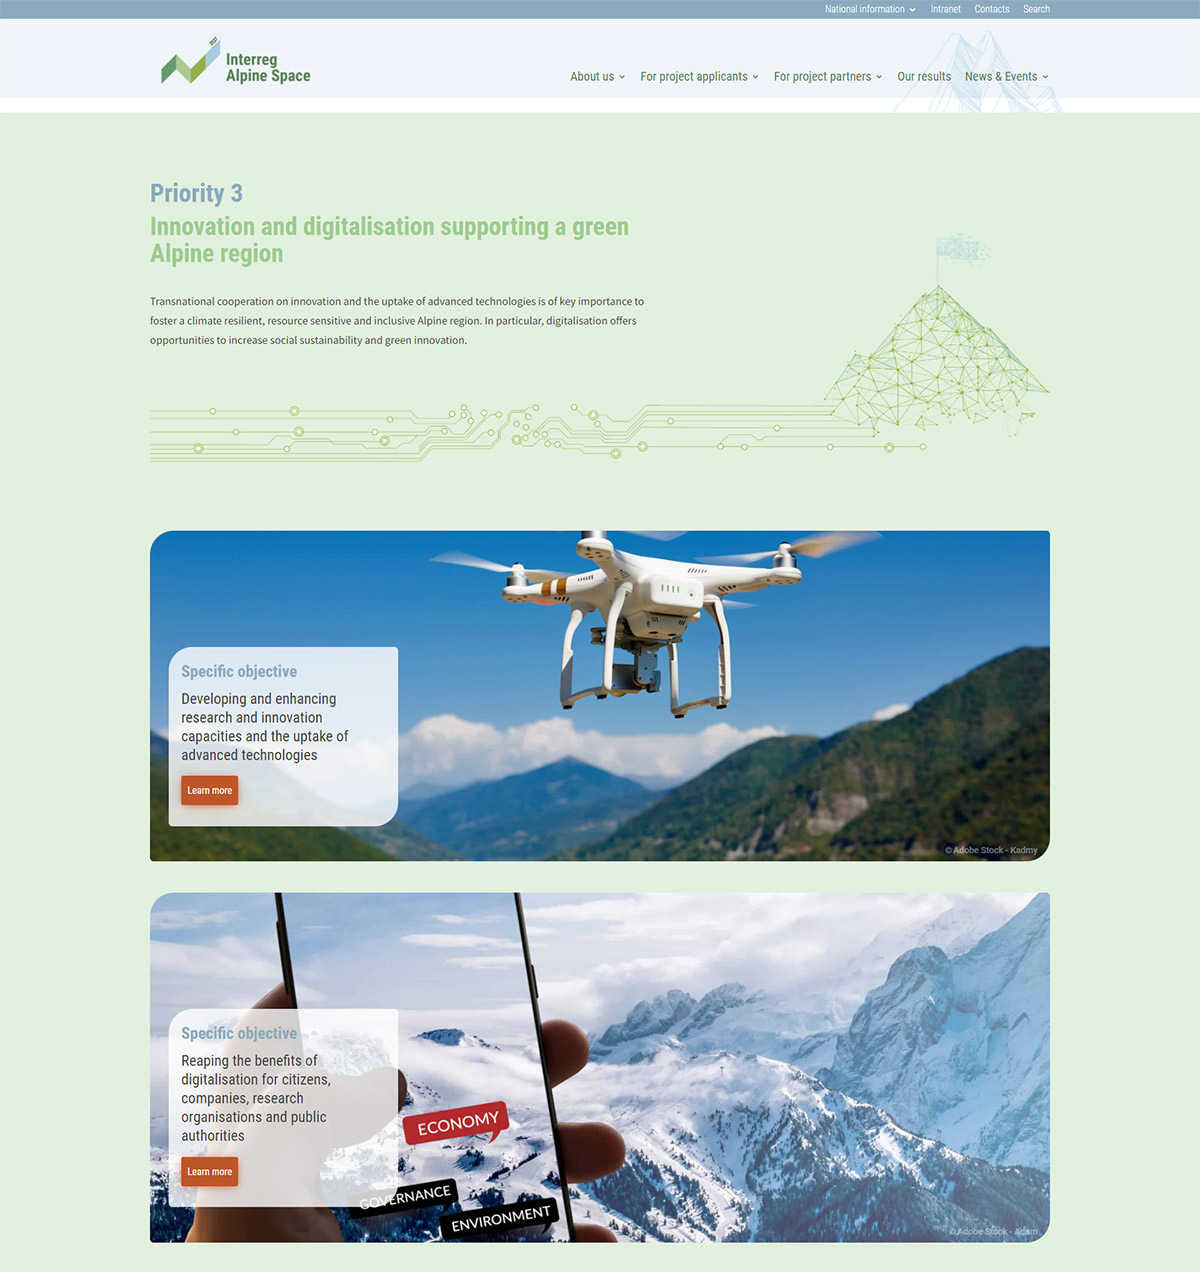 iService Relaunch Website Interreg Alpine Space 